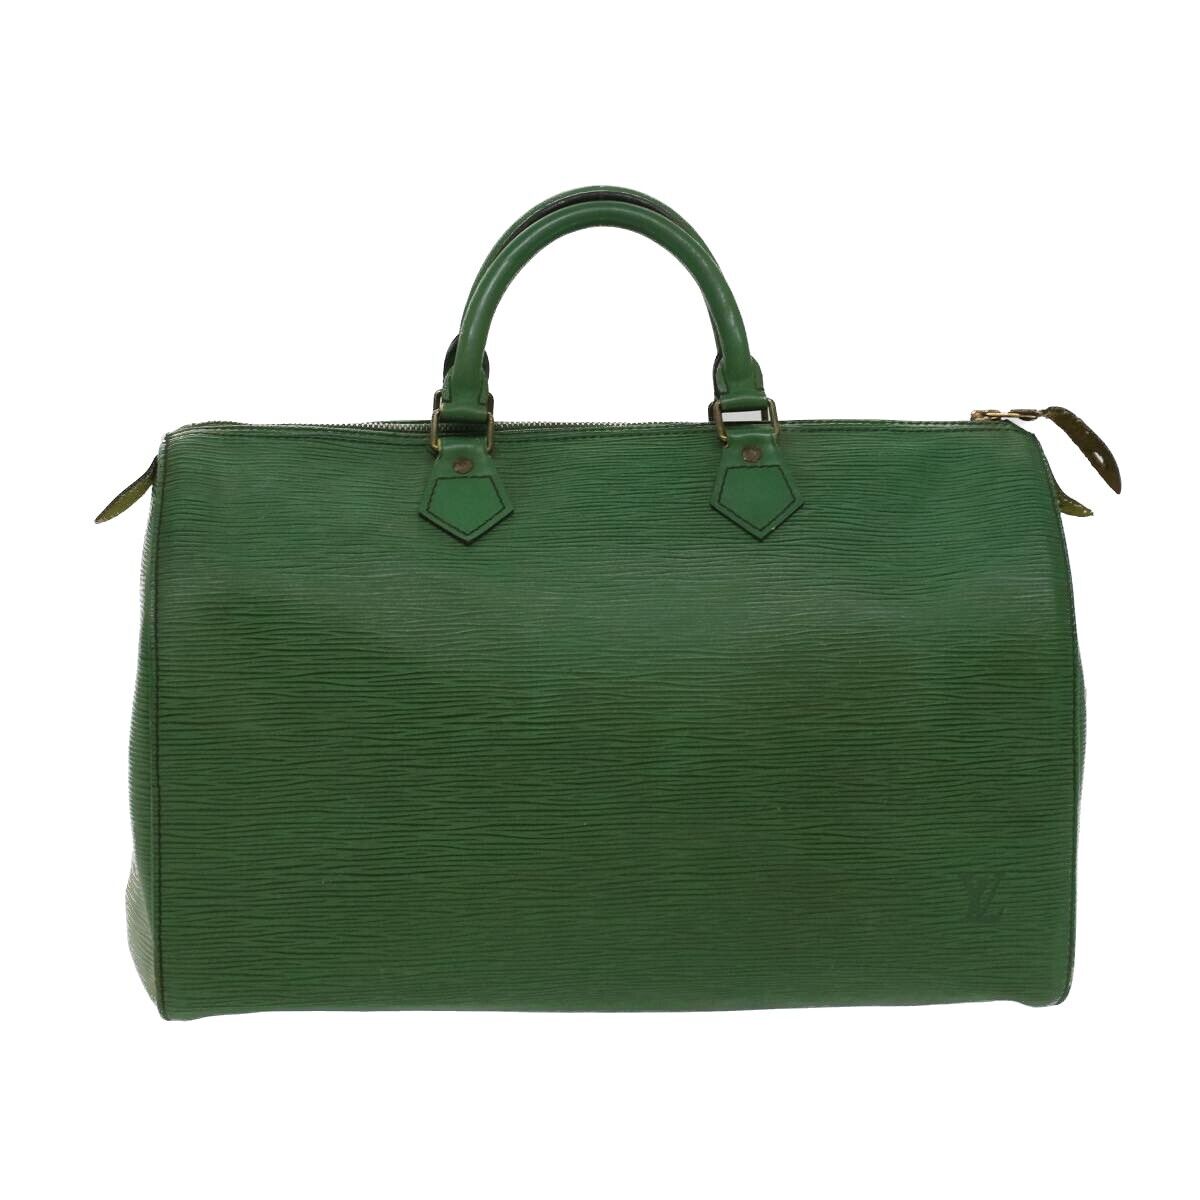 Speedy 25 Green Epi Leather Bag